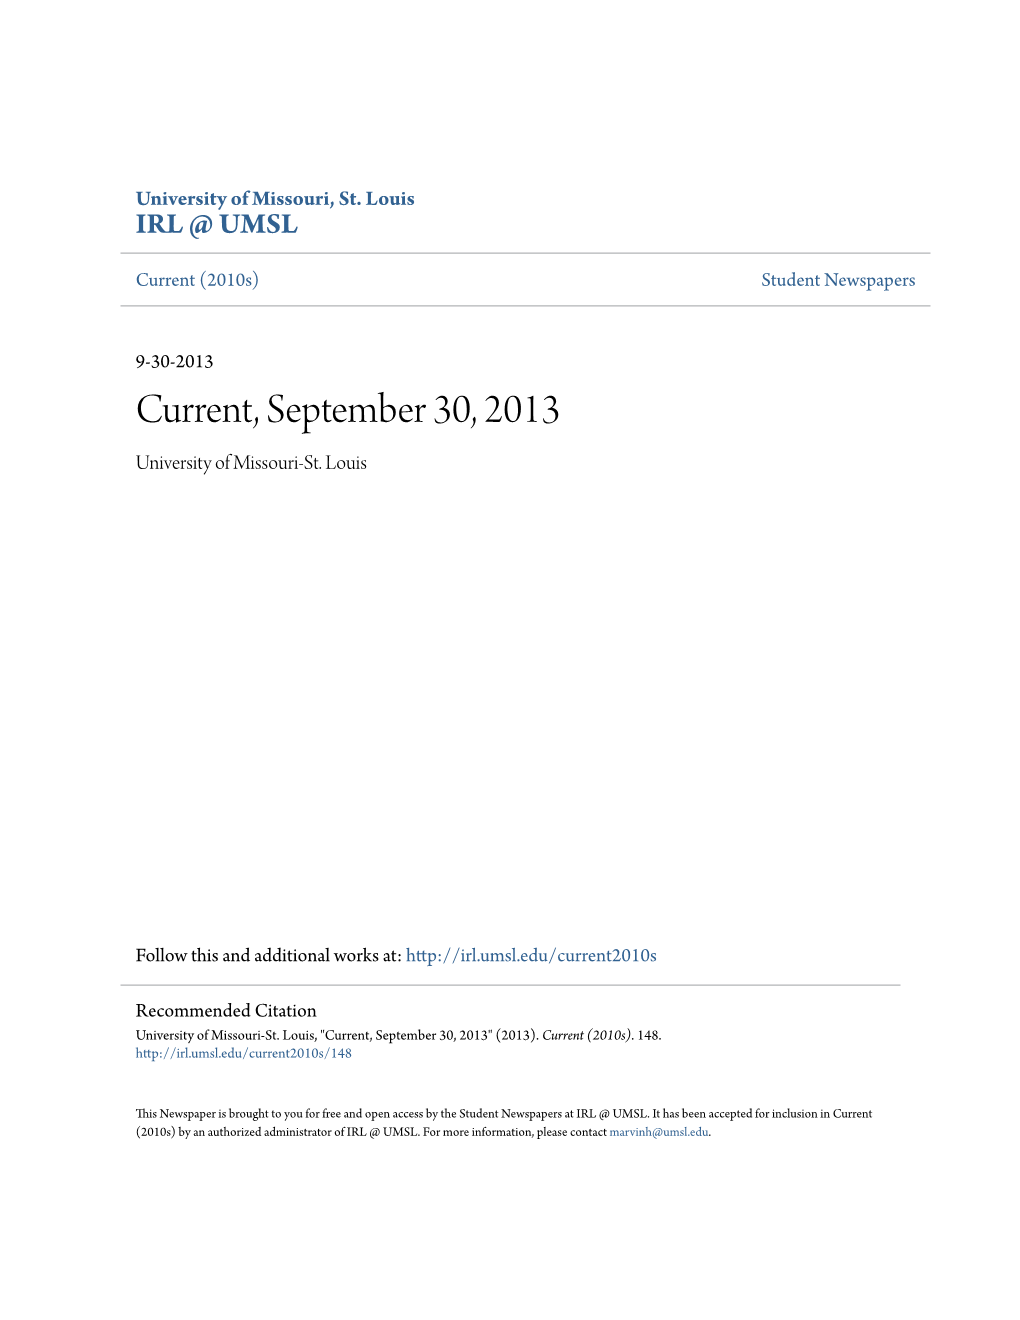 Current, September 30, 2013 University of Missouri-St